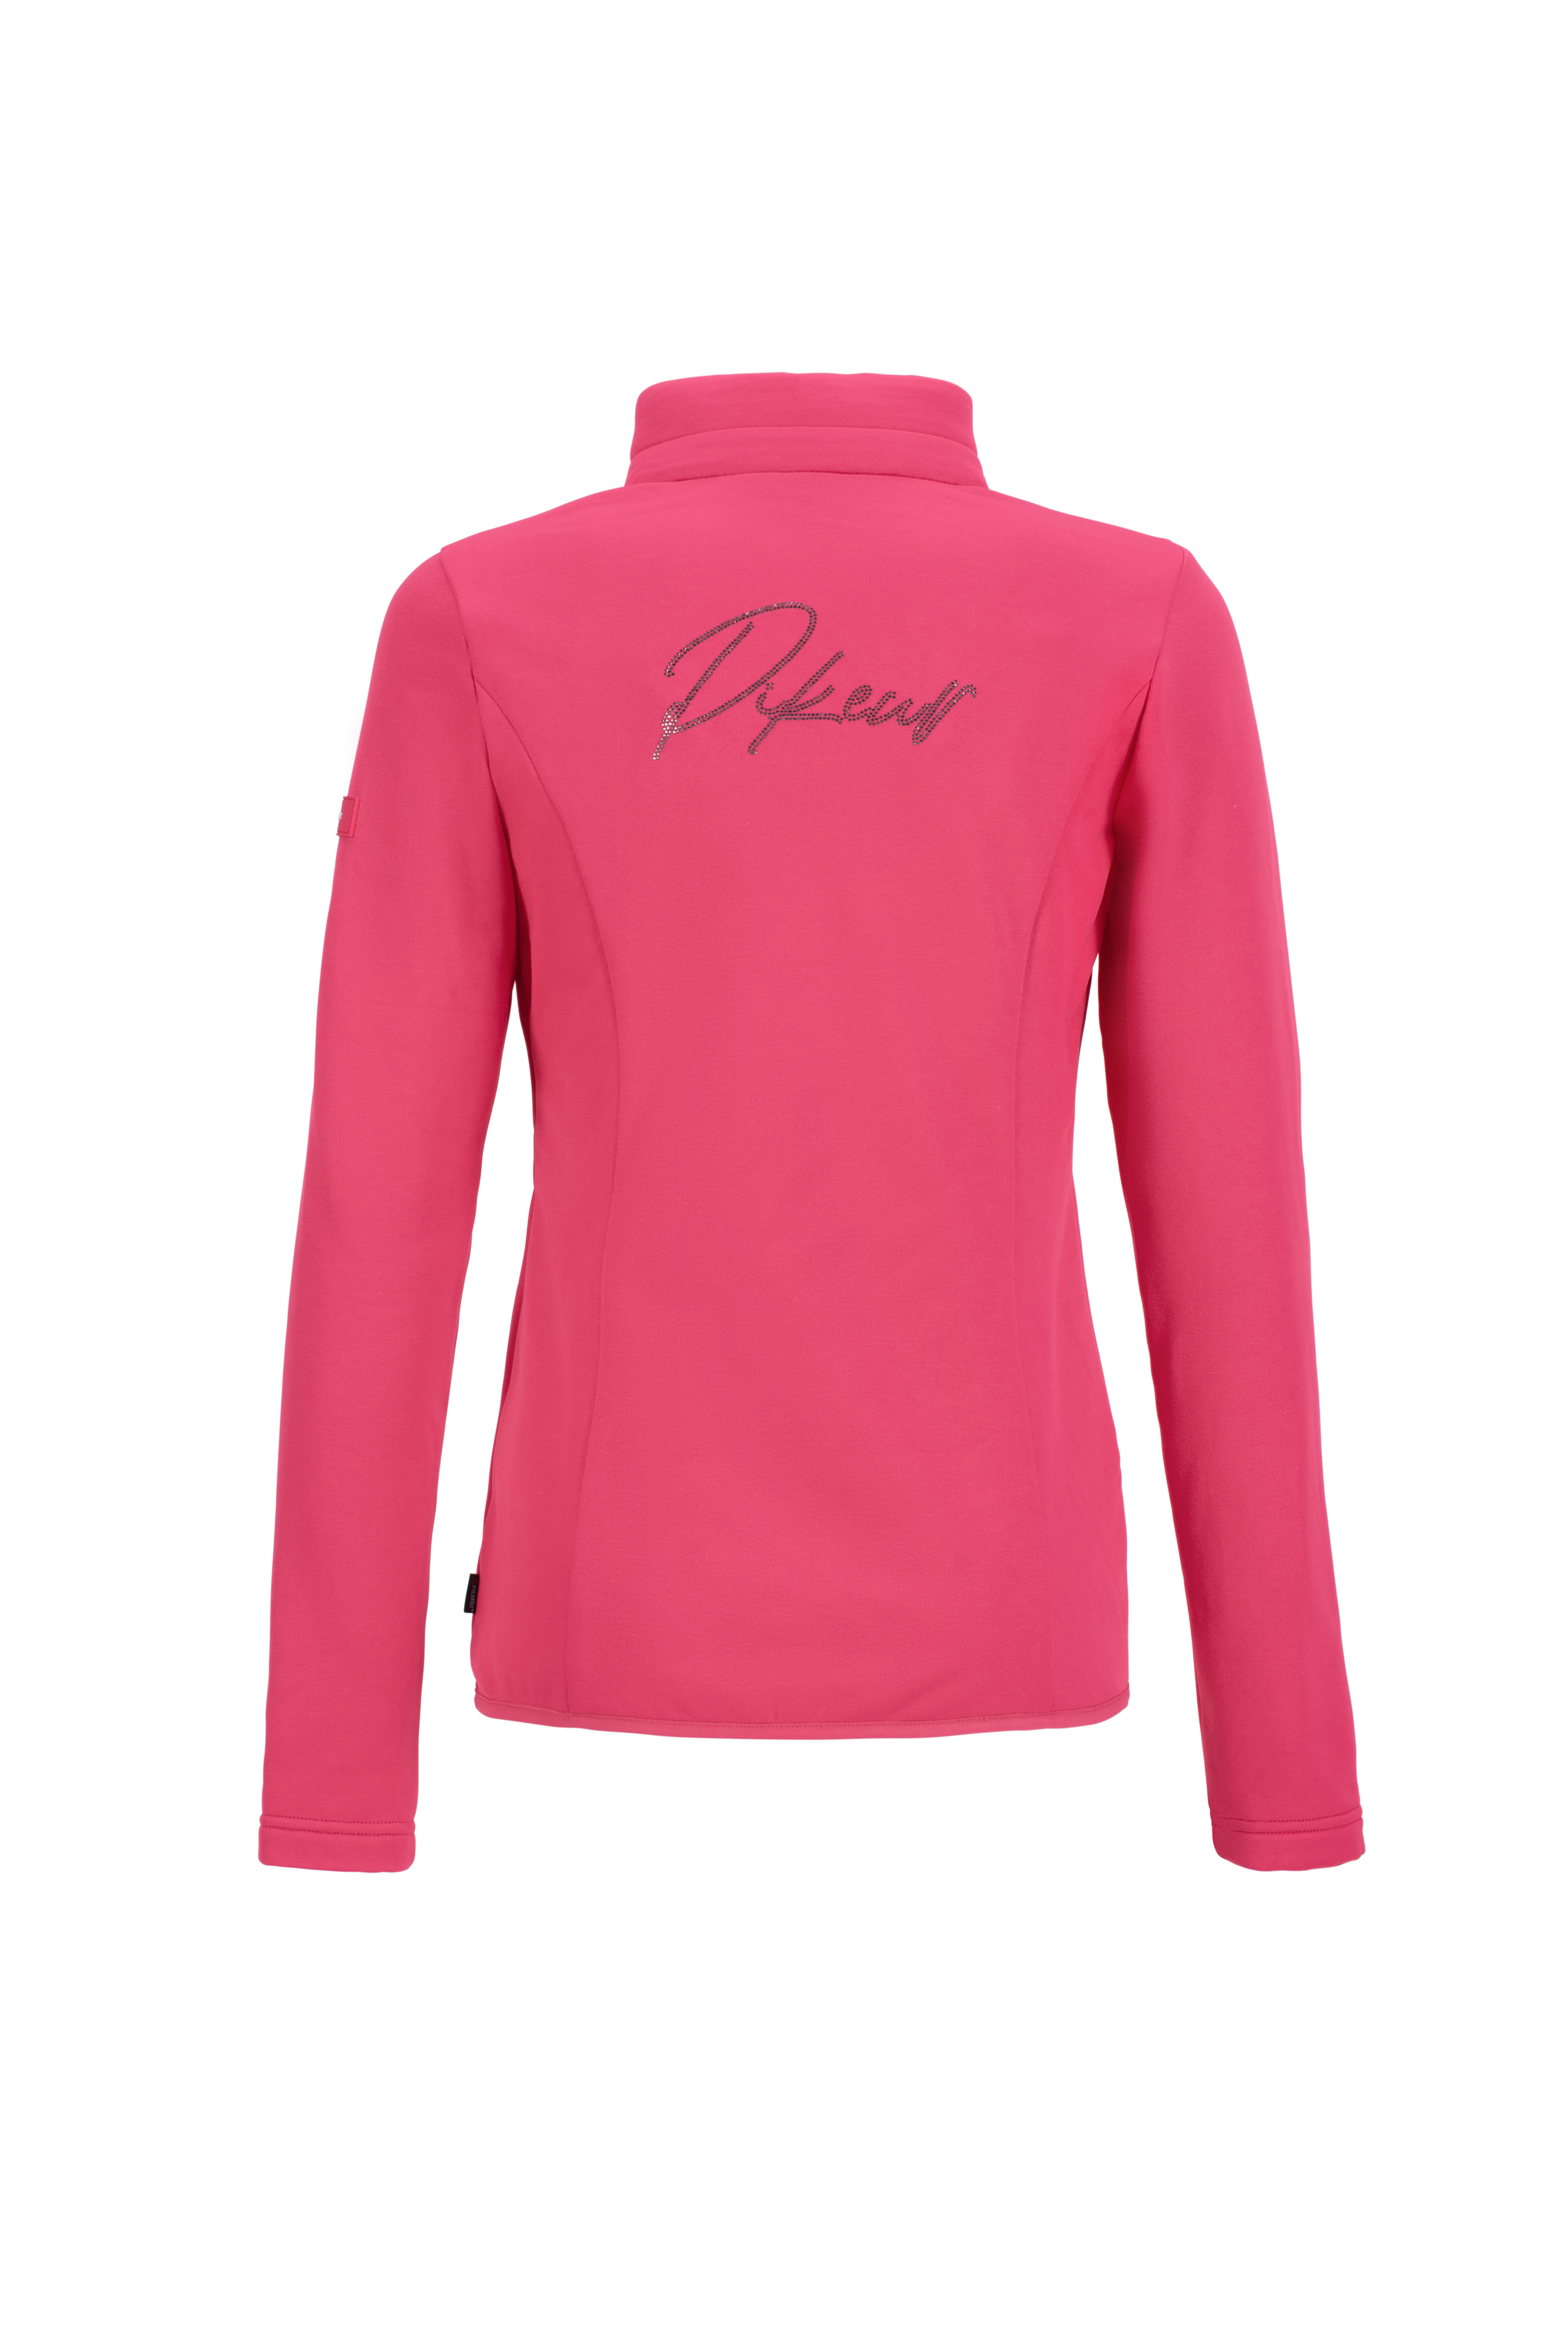 Funktionsshirt DINA, Damen, Sportswear 22, blush pink